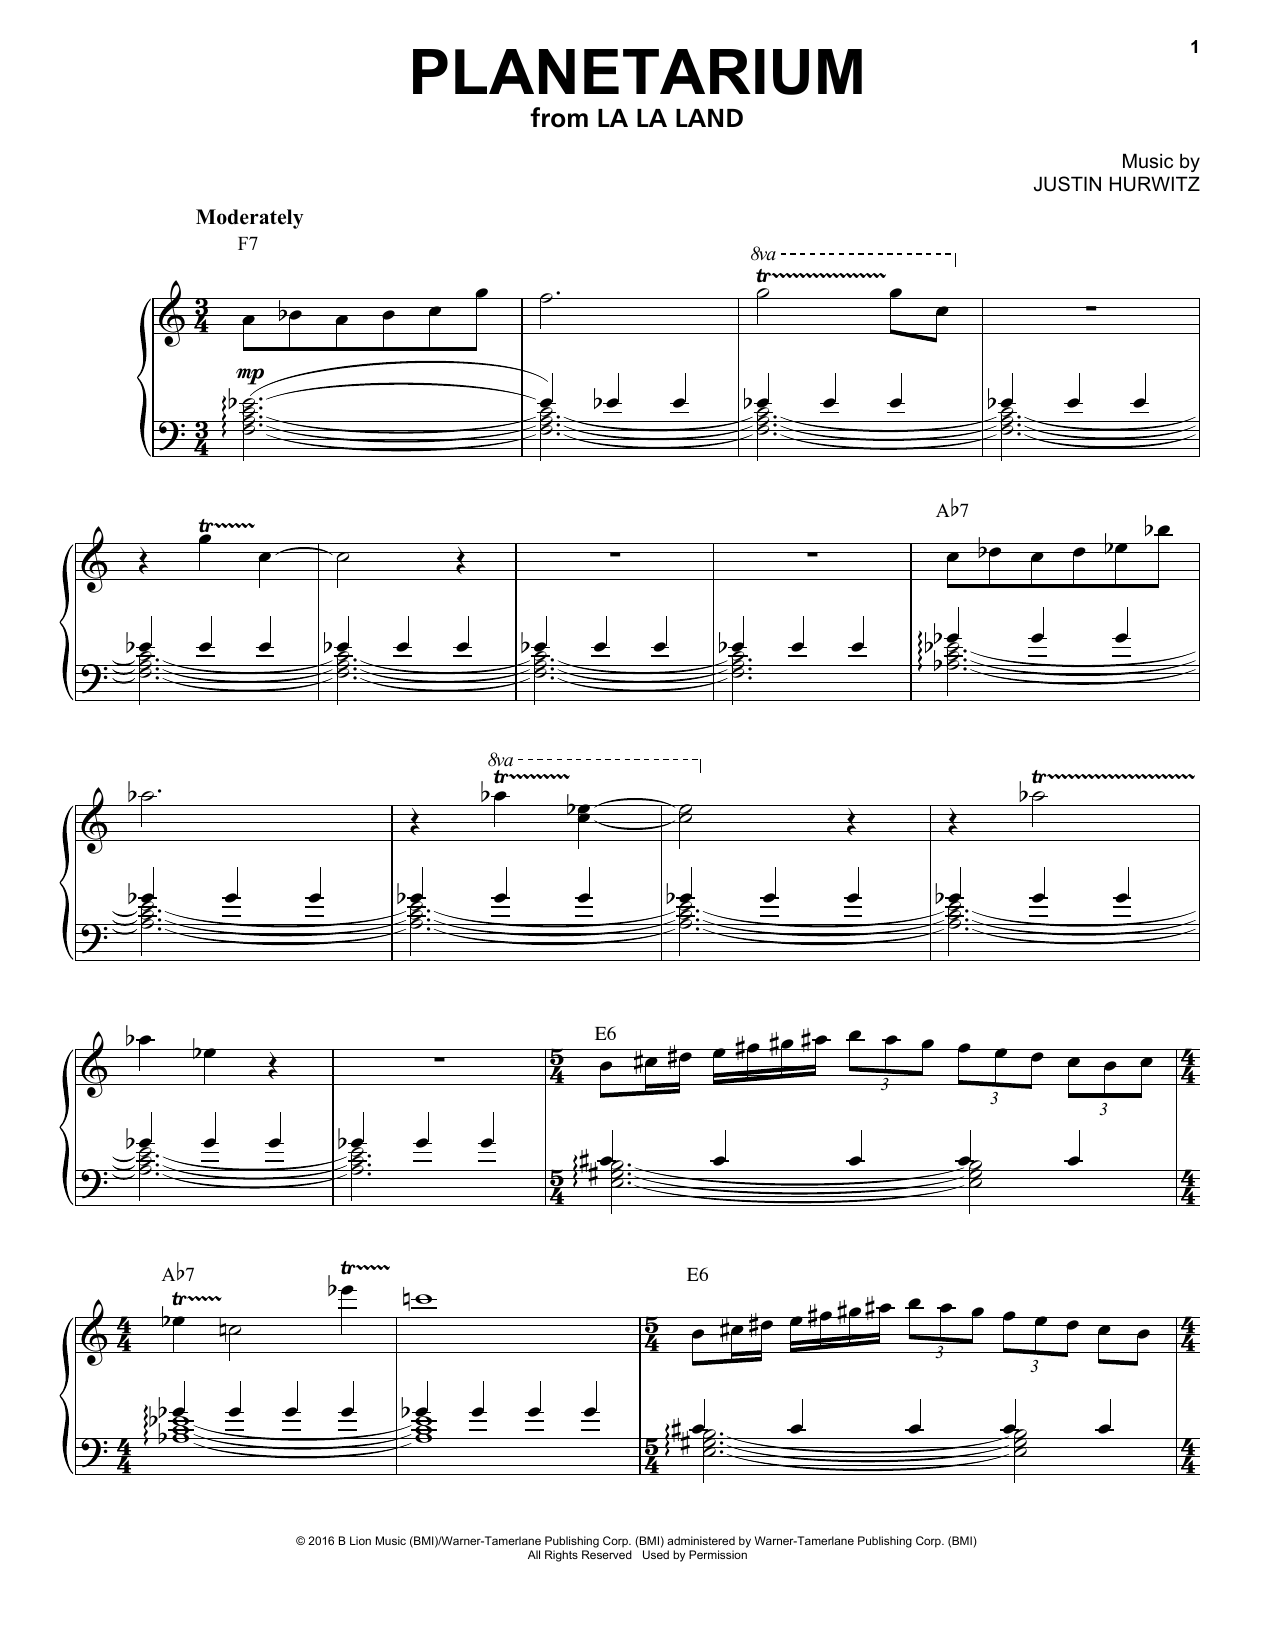 Justin Hurwitz Planetarium Sheet Music Notes & Chords for Easy Guitar Tab - Download or Print PDF